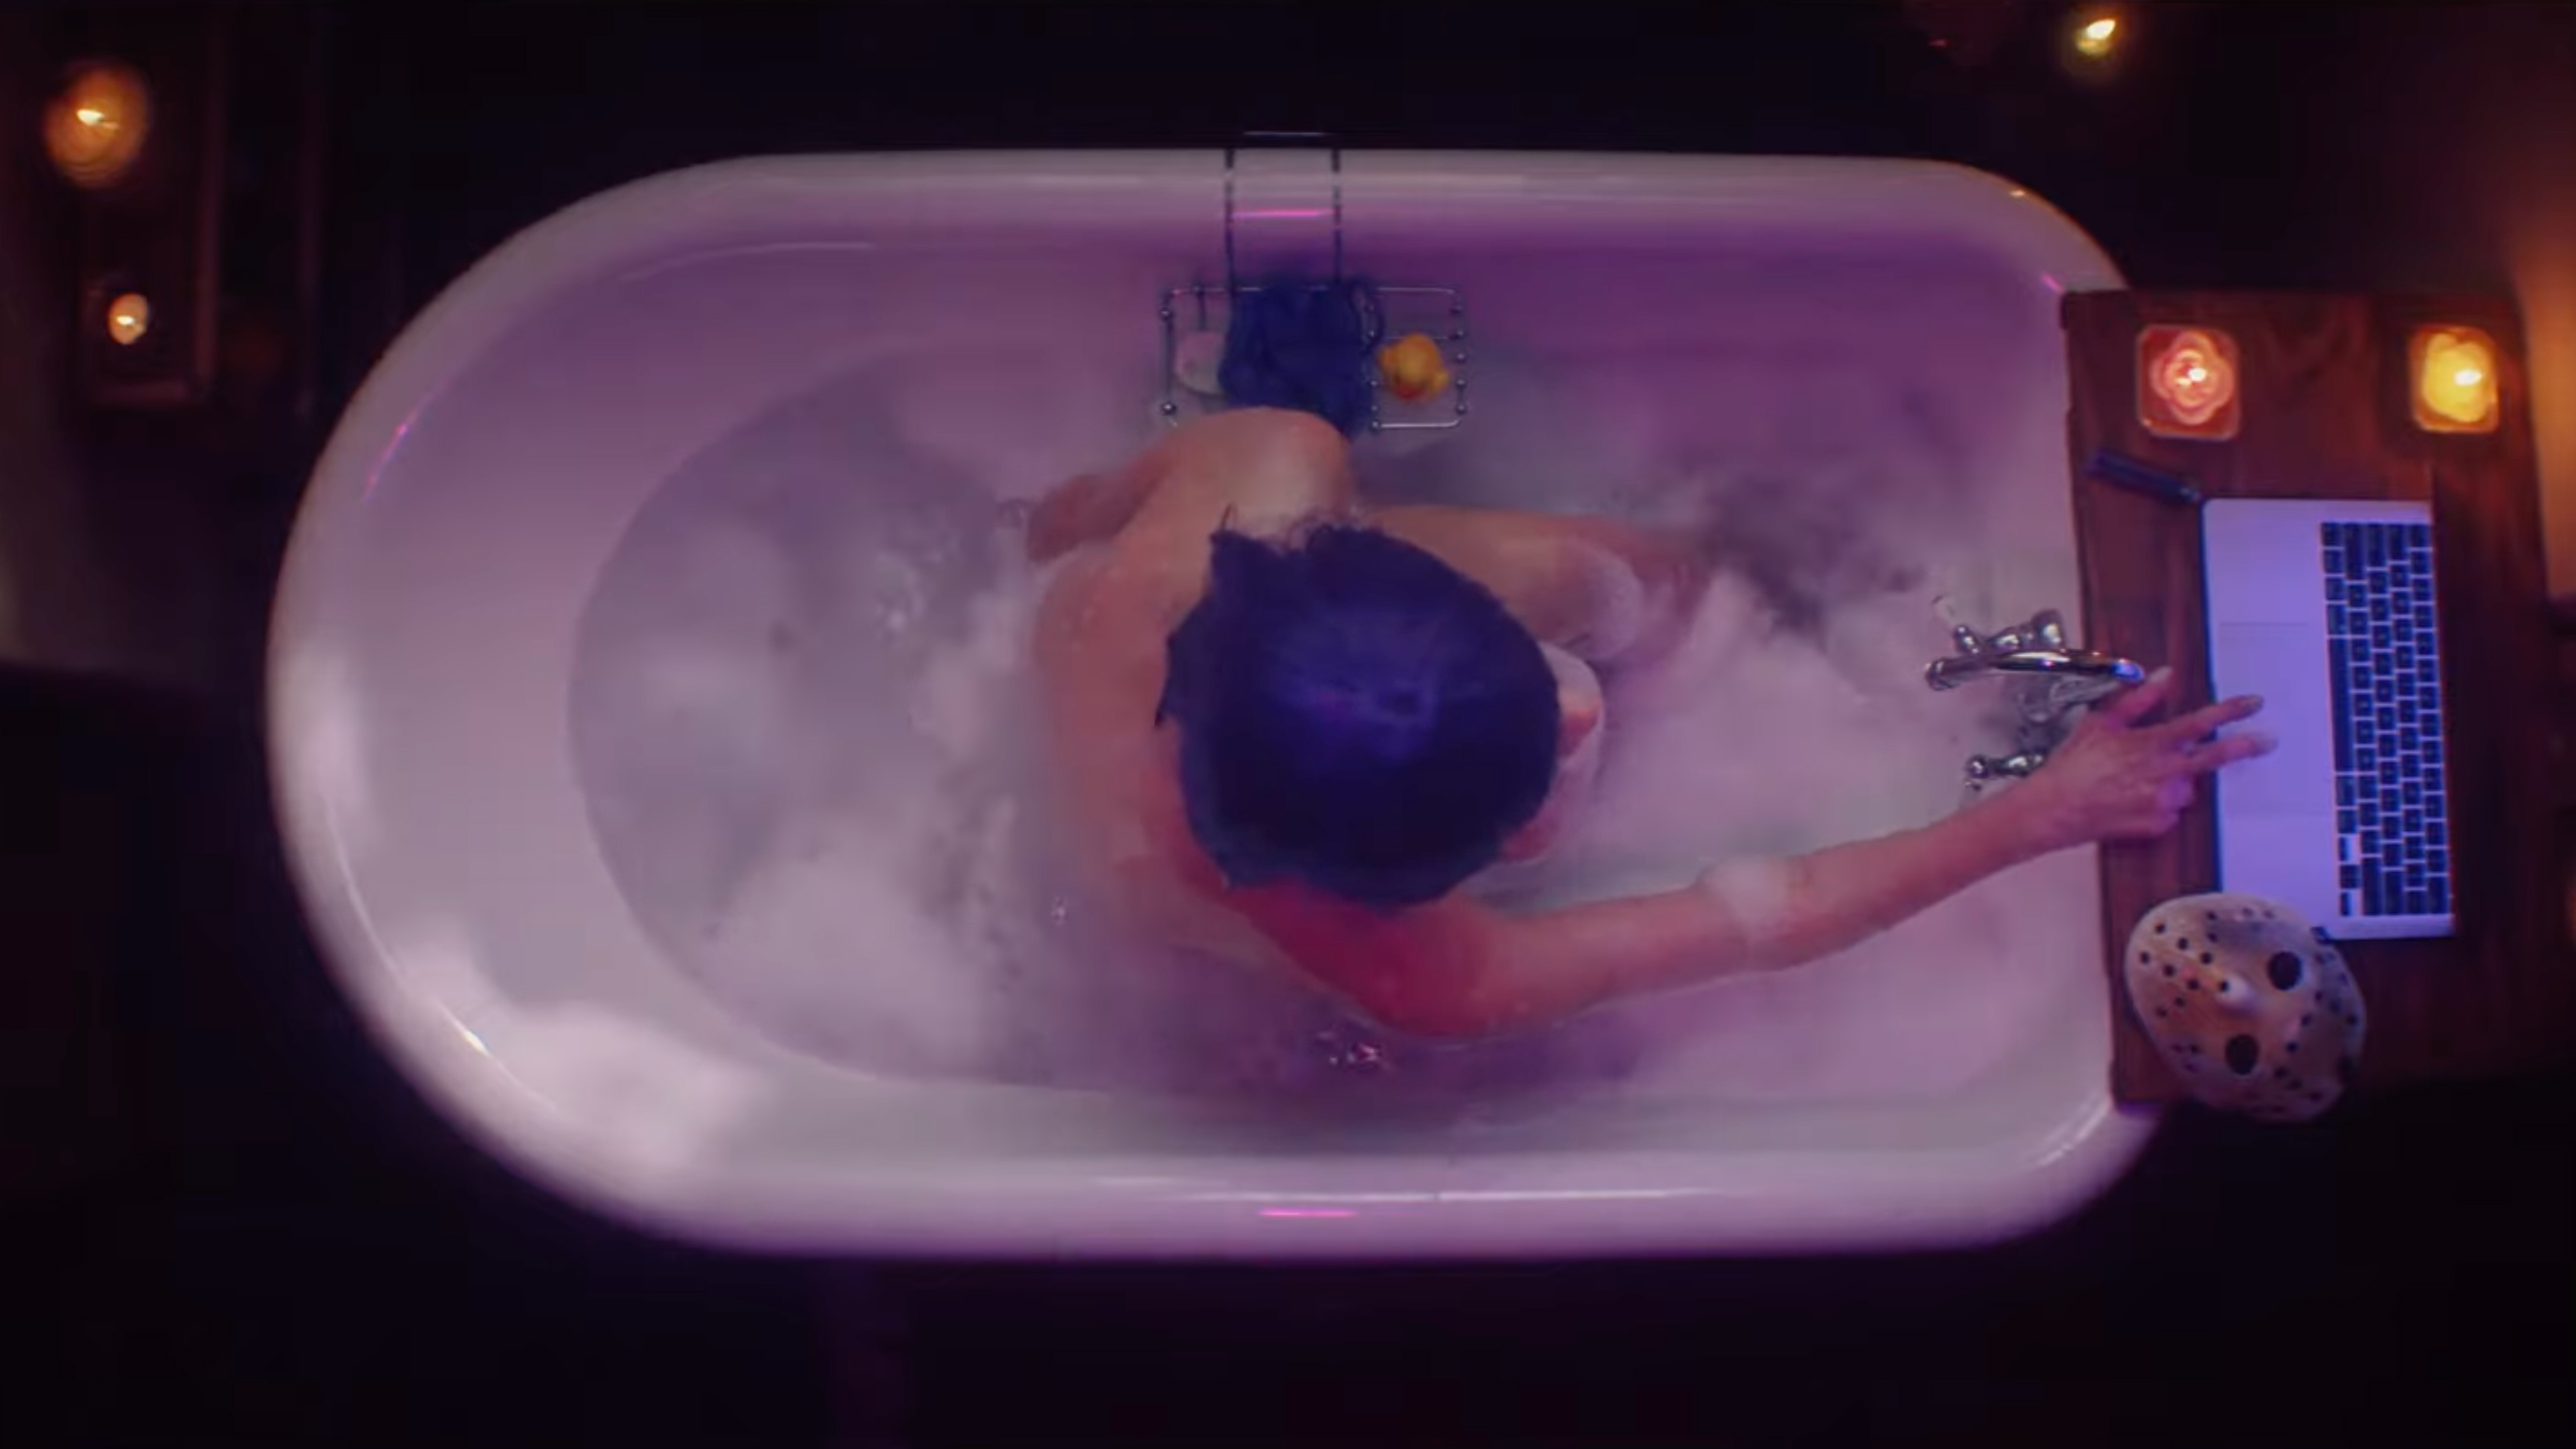 Erotic slasher flick starring Ashley Benson to go on sale as NFT for $263 |  Digital Camera World